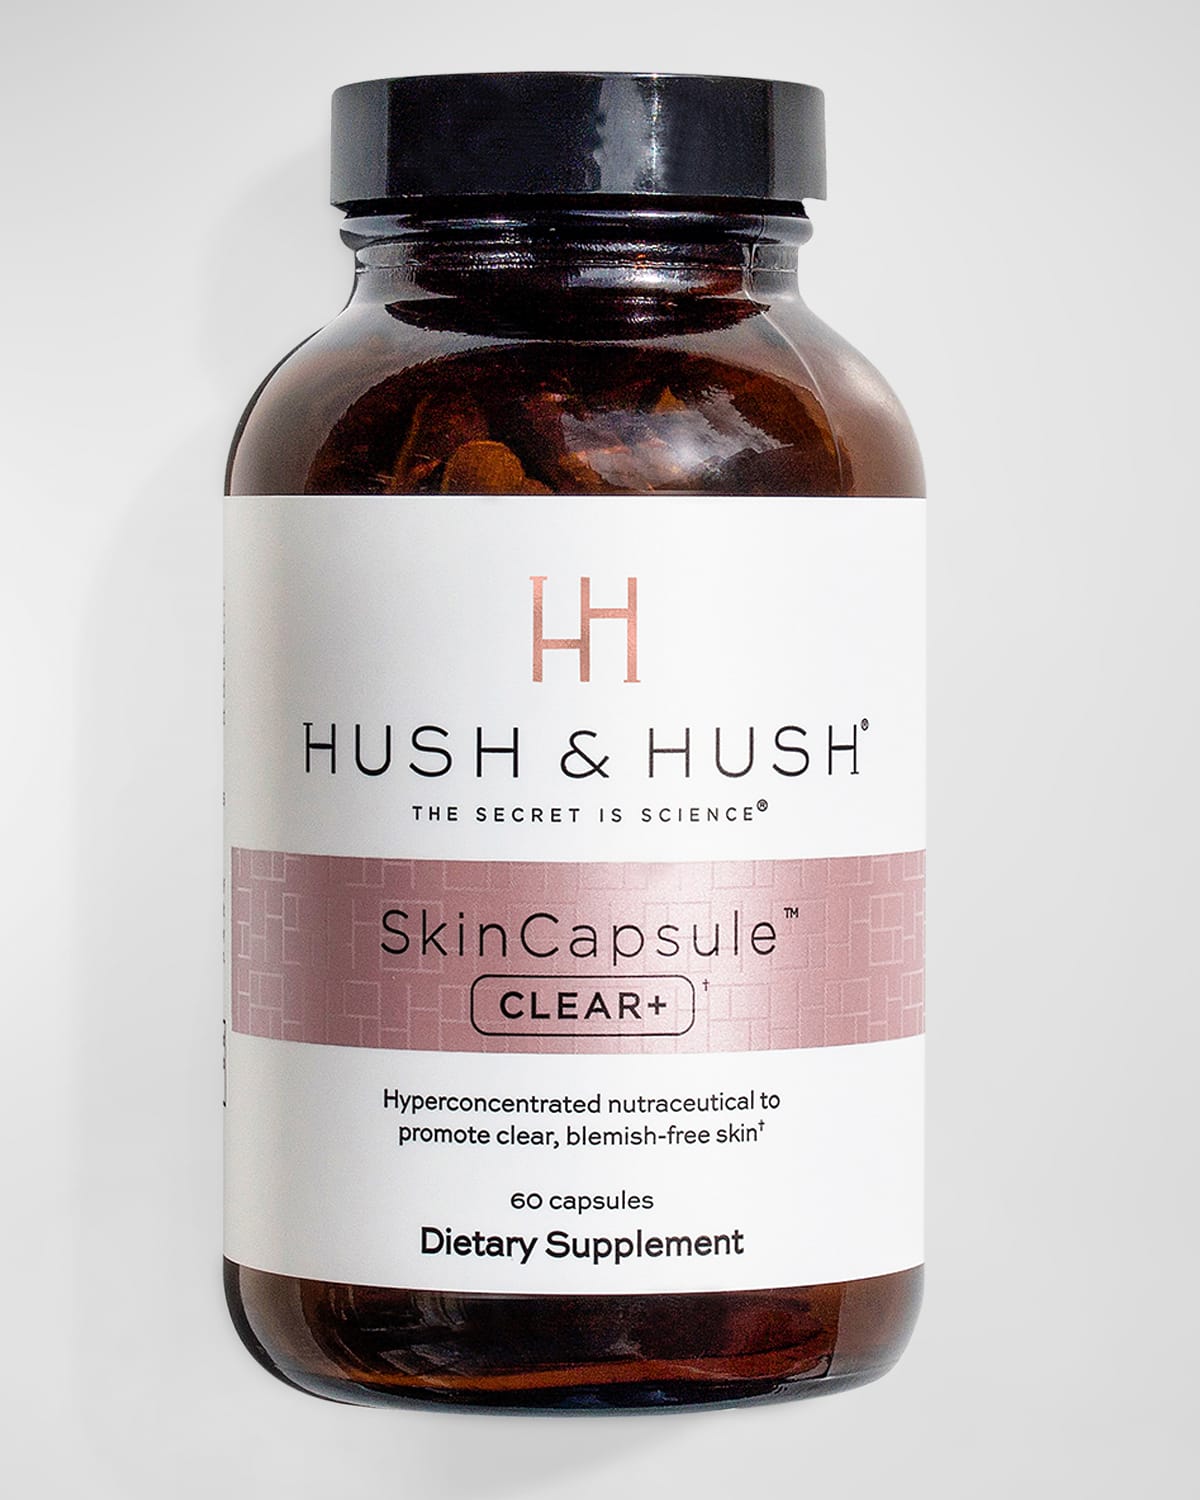 Hush & Hush SkinCapsule CLEAR+ Supplement - 60 Capsules